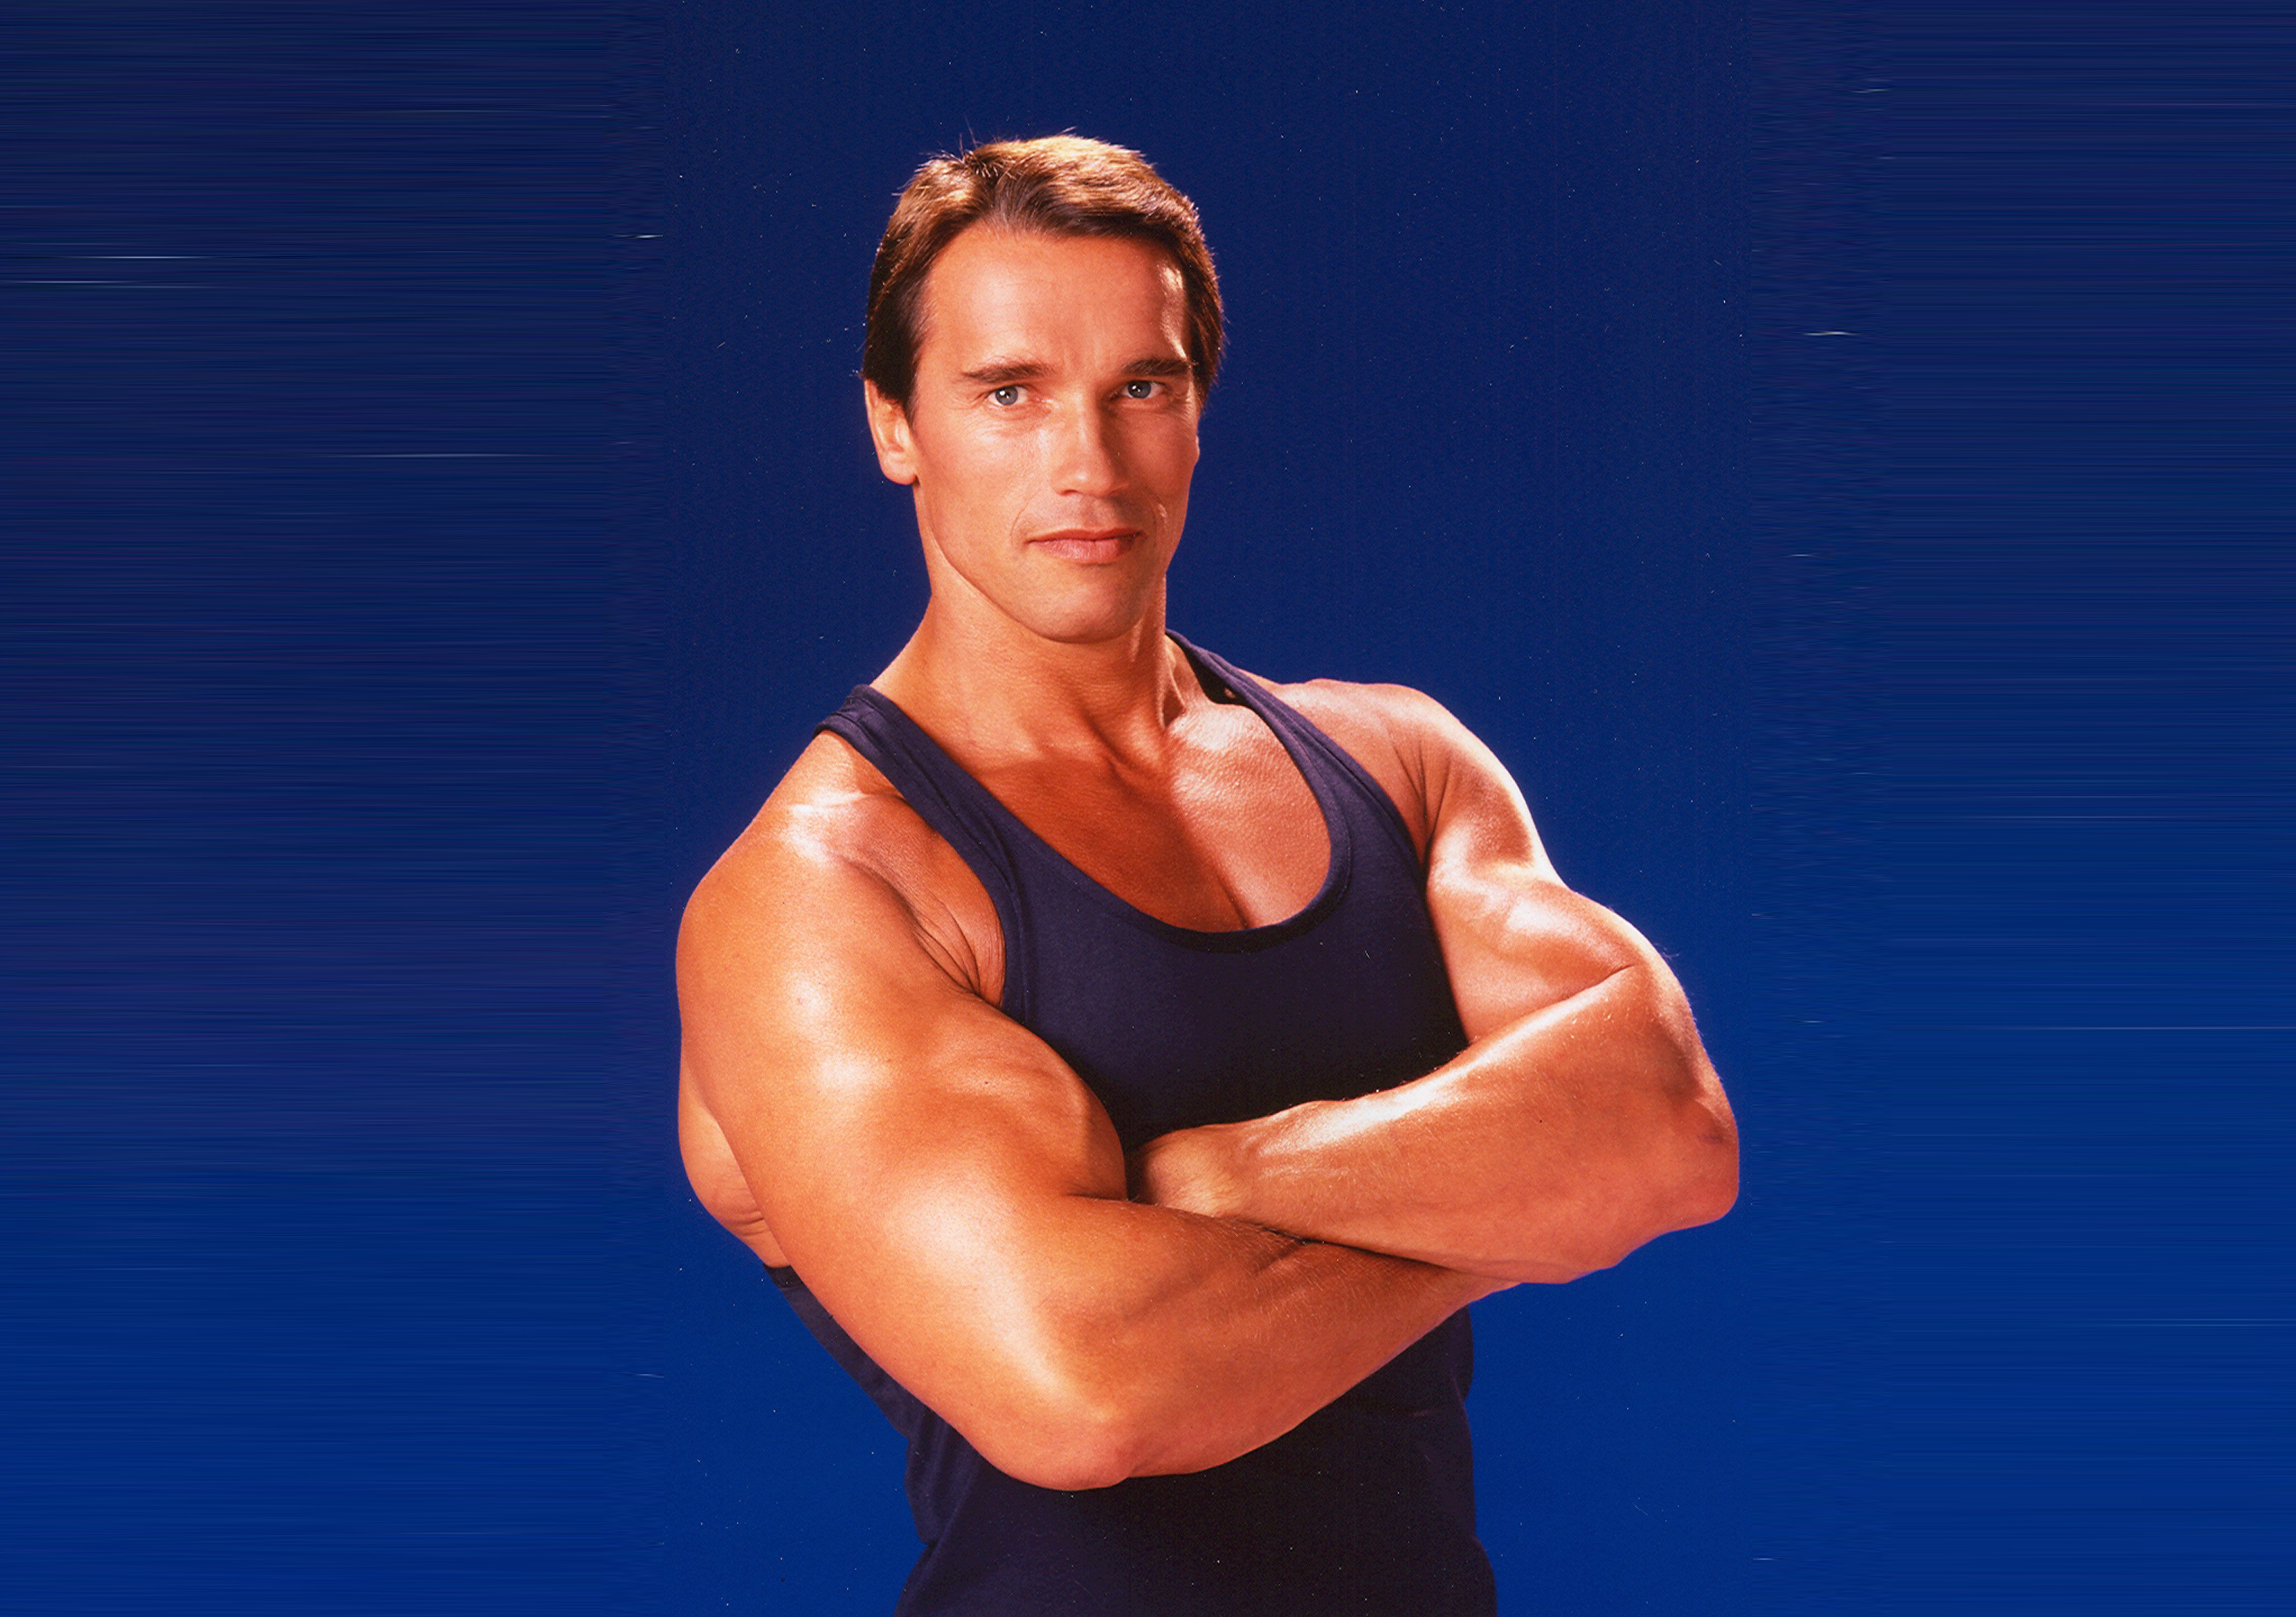 Arnold schwarzenegger bodybuilding wallpaper